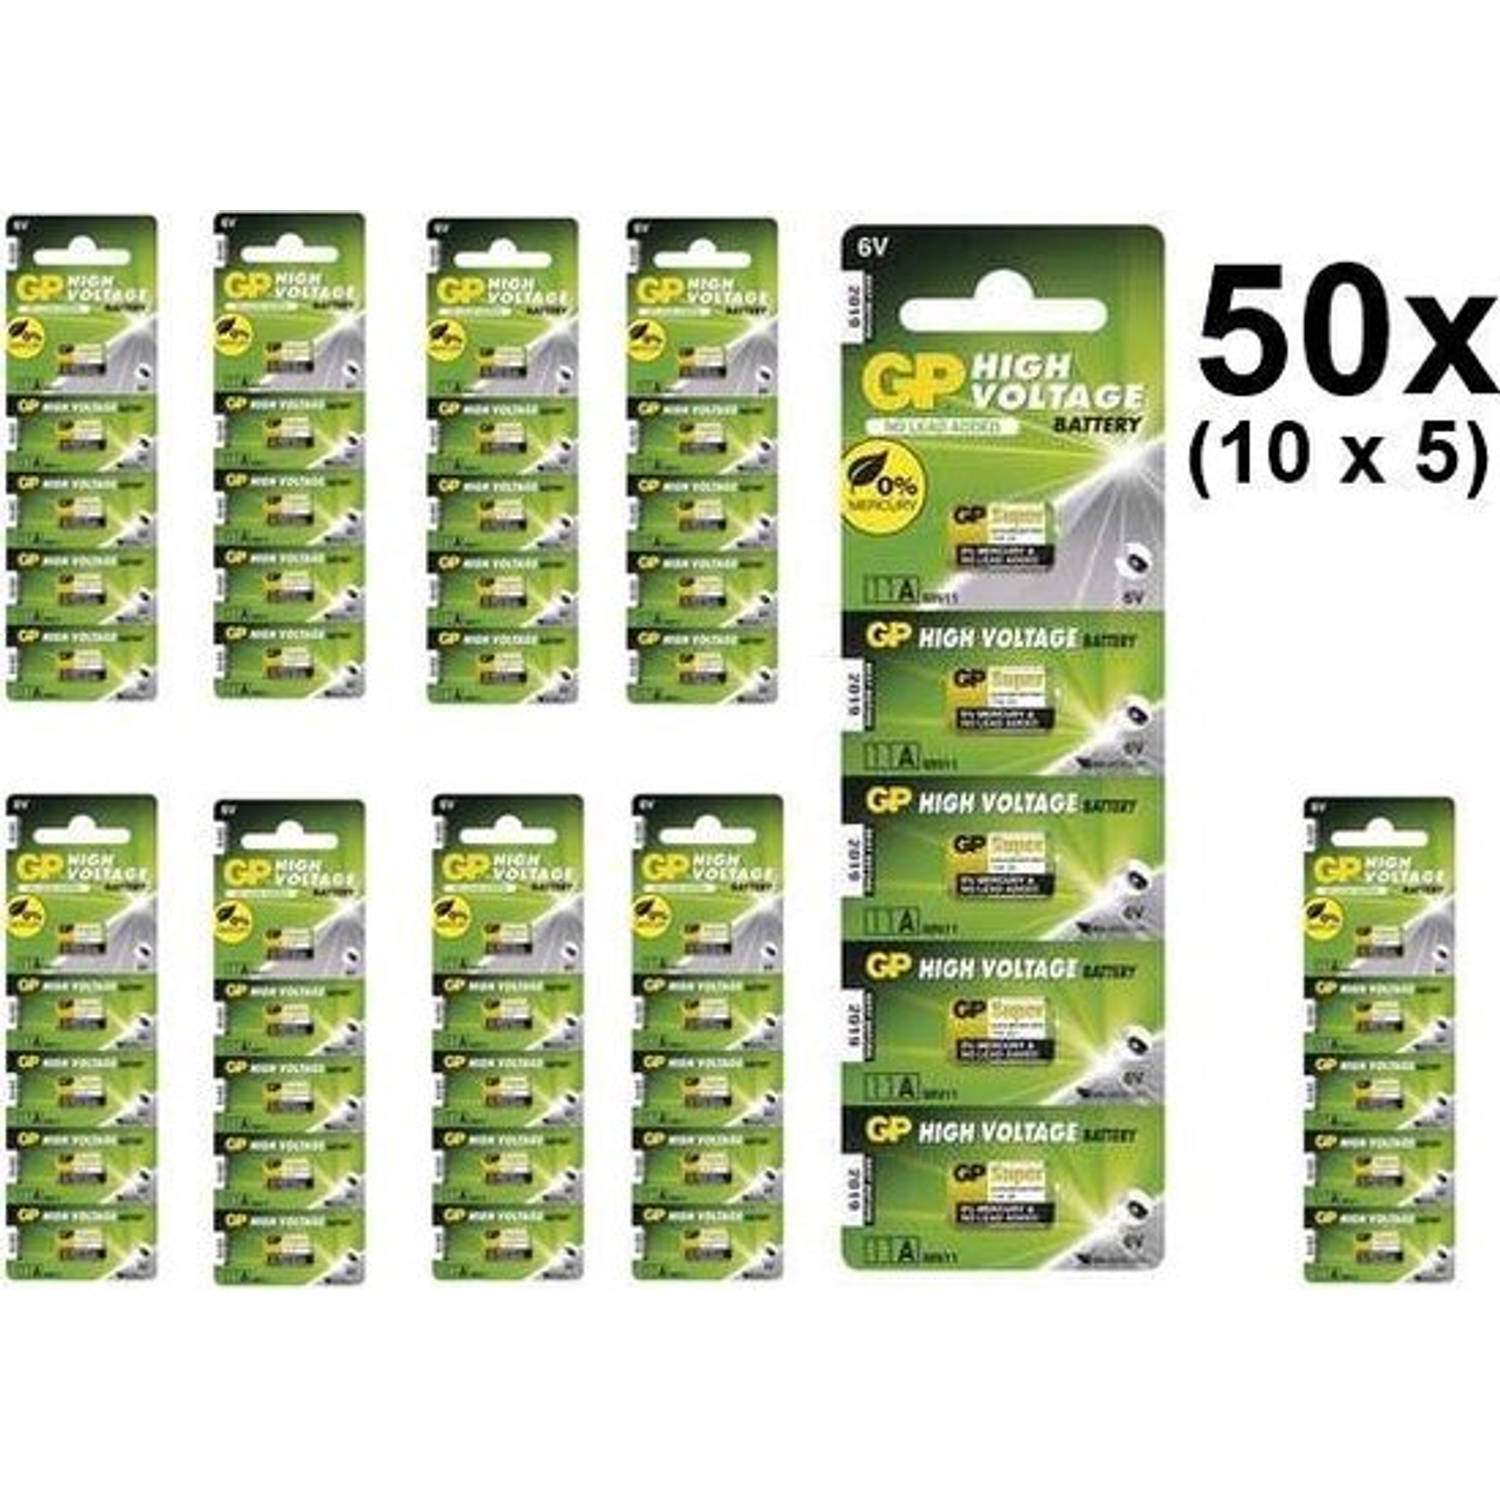 50 Stuks (10 Blisters a 5st) - GP A11 MN11 11A 6V alkaline batterij